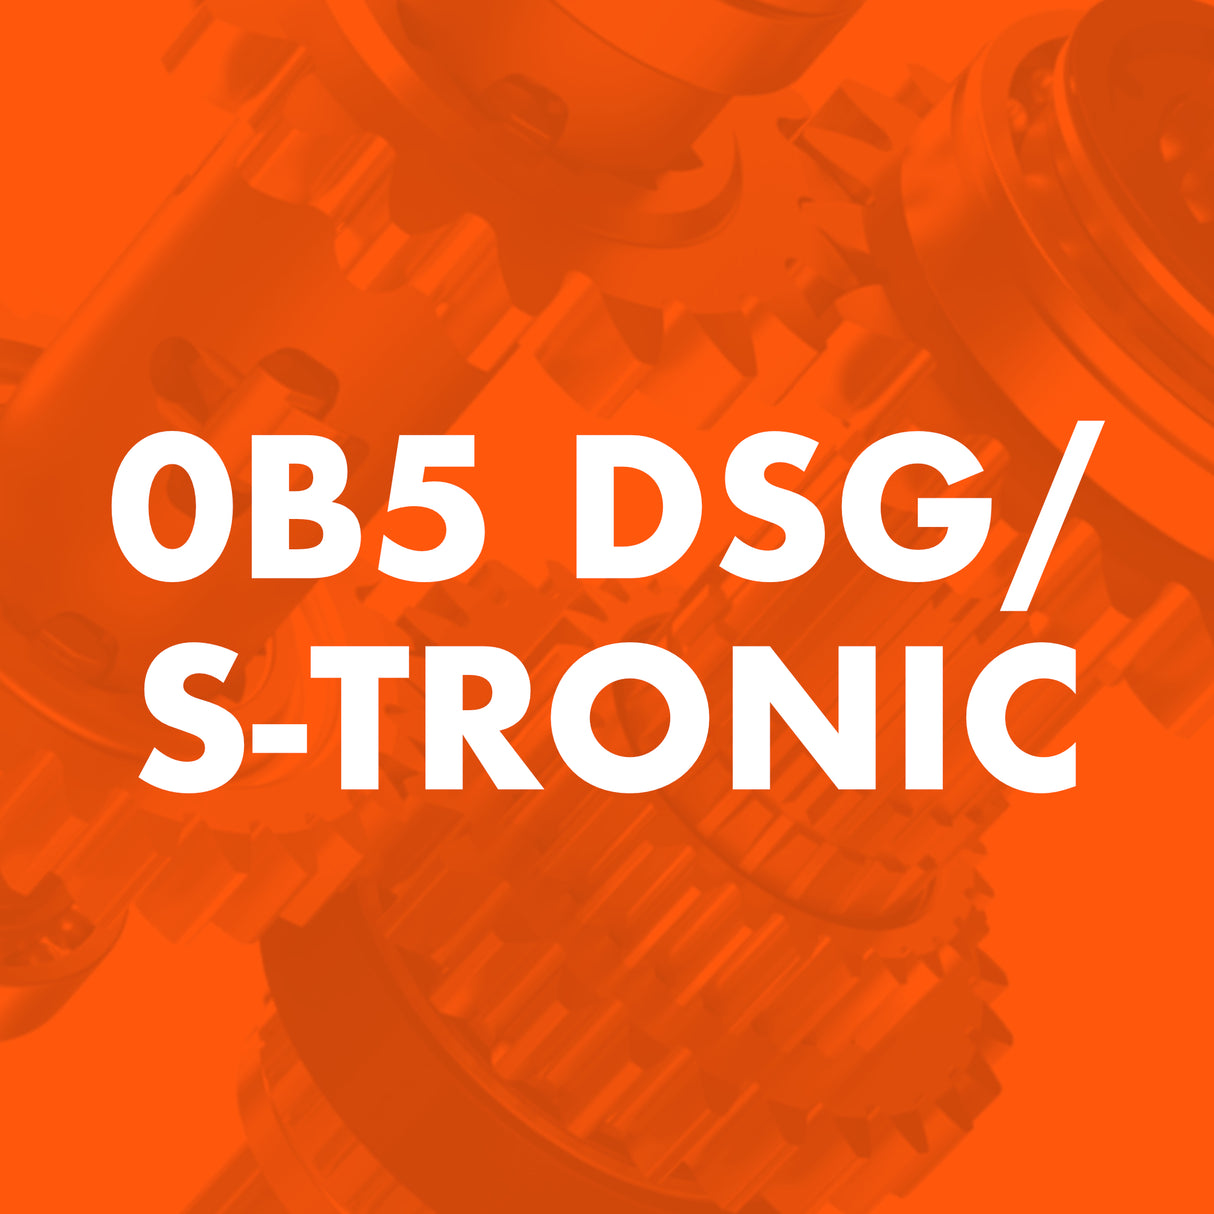 0B5 DSG/S-Tronic Catalogue